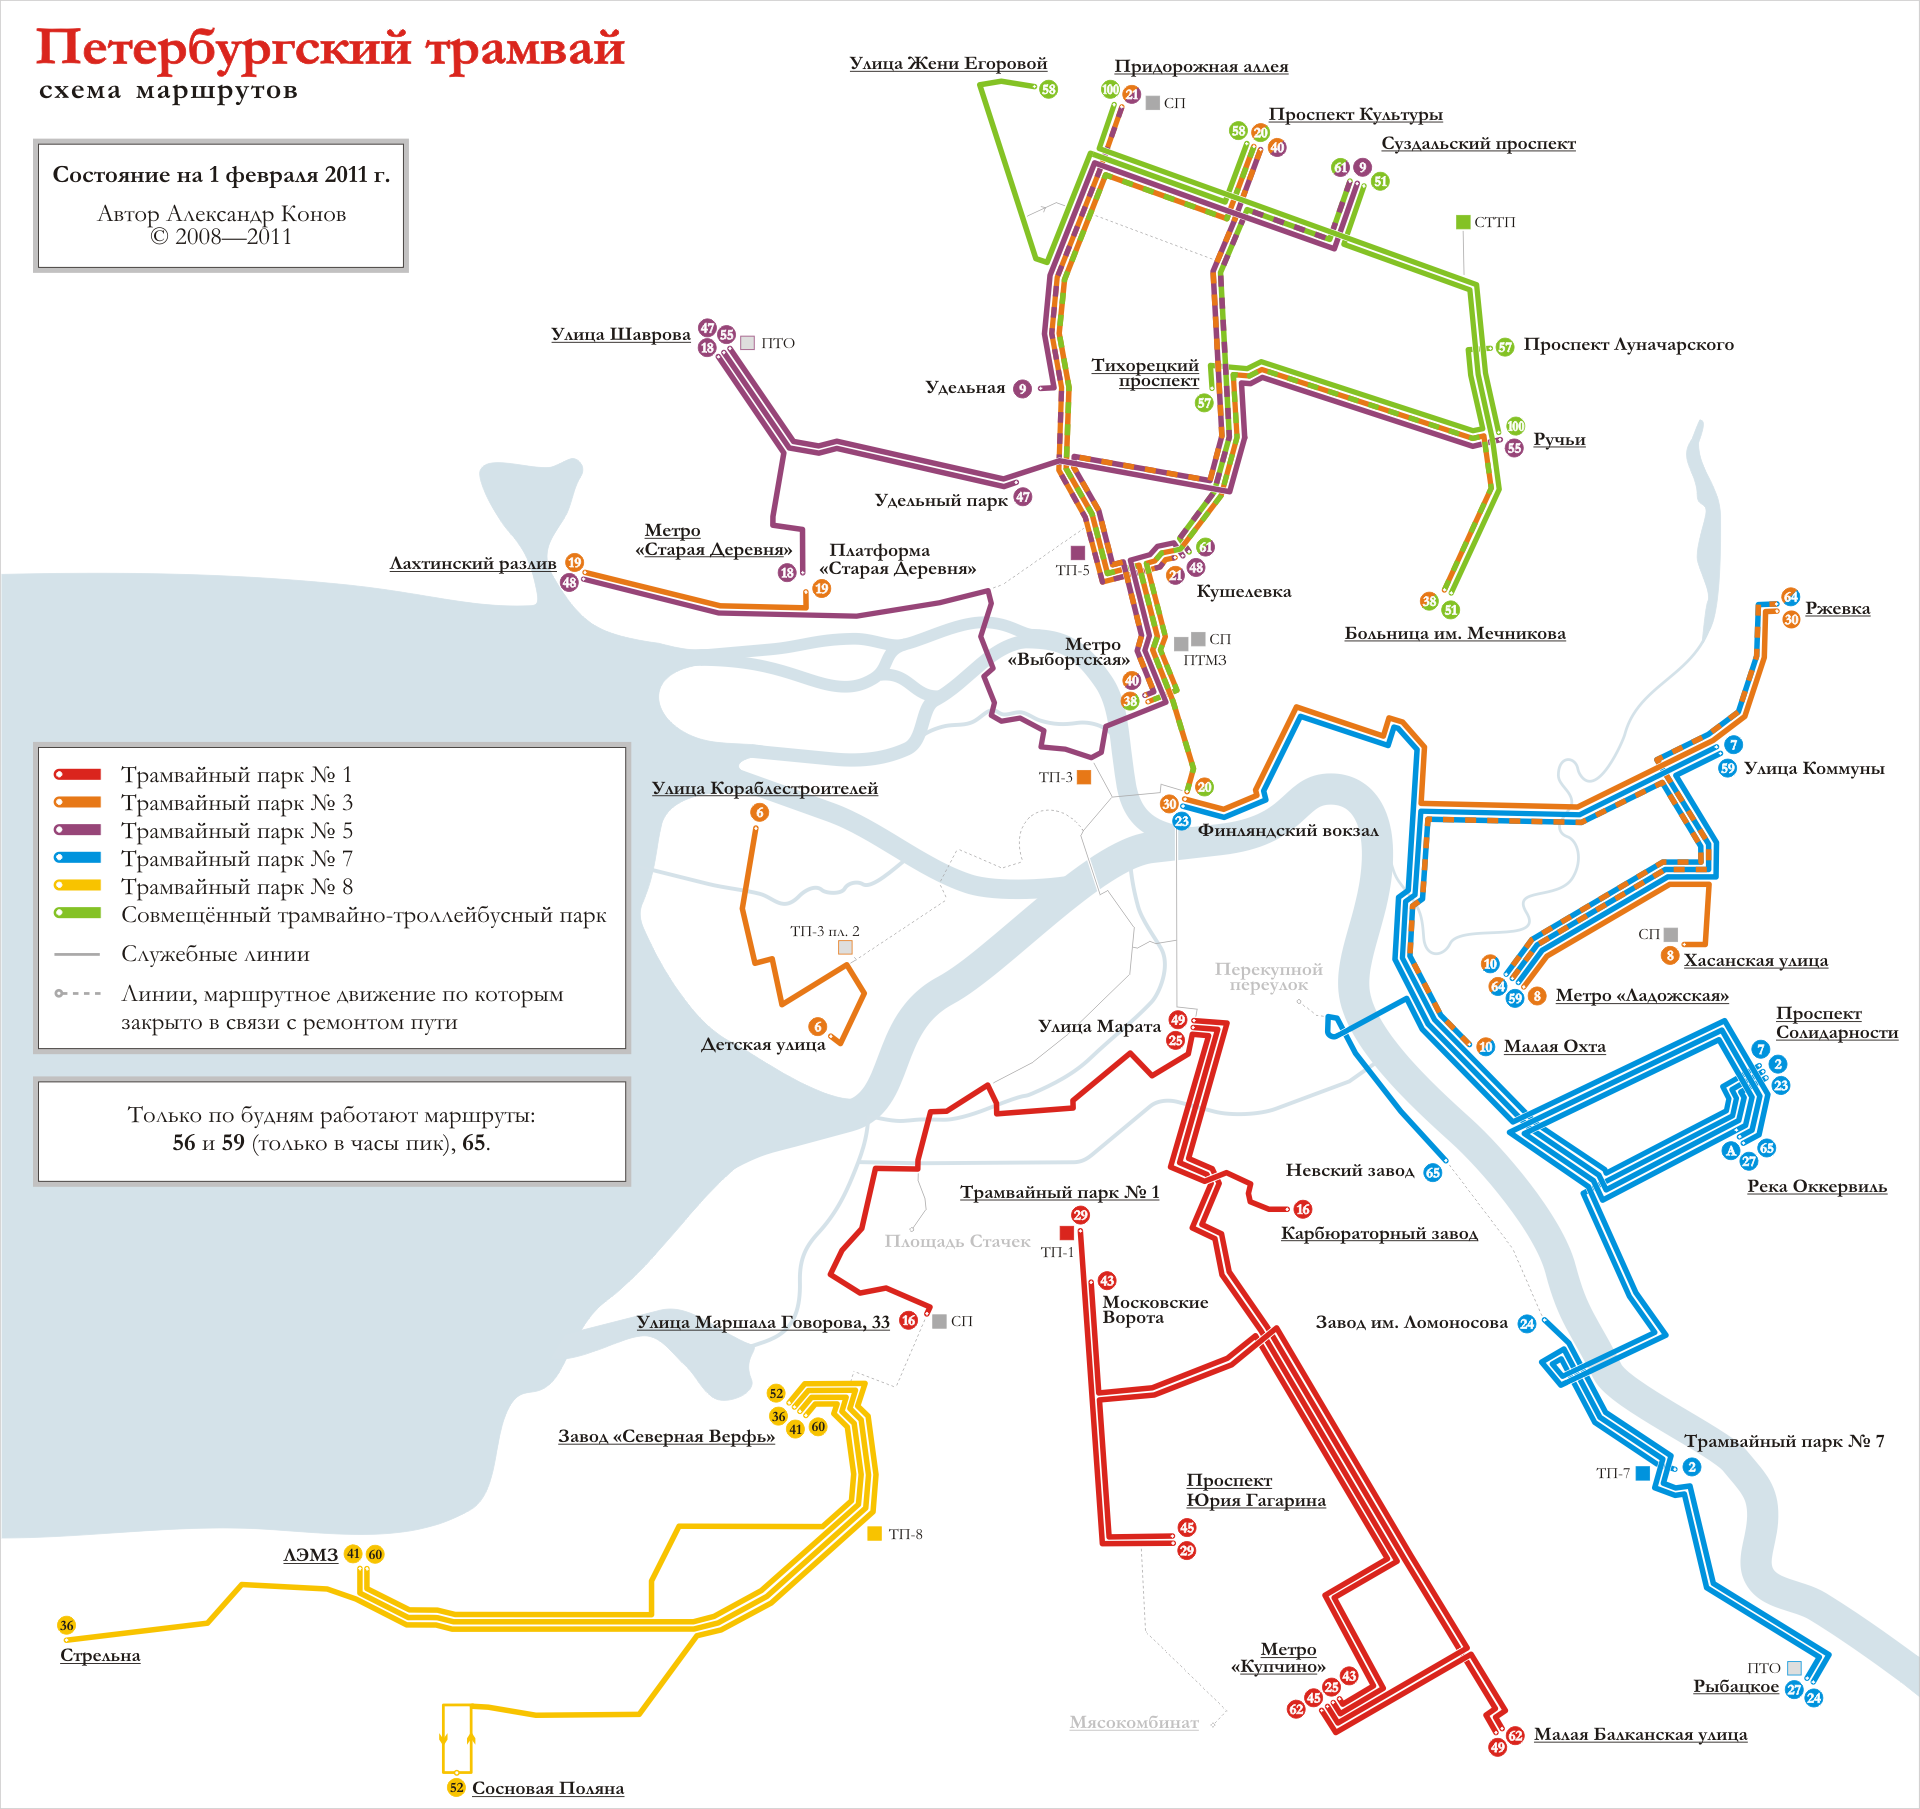 Sanktpēterburga — Systemwide Maps